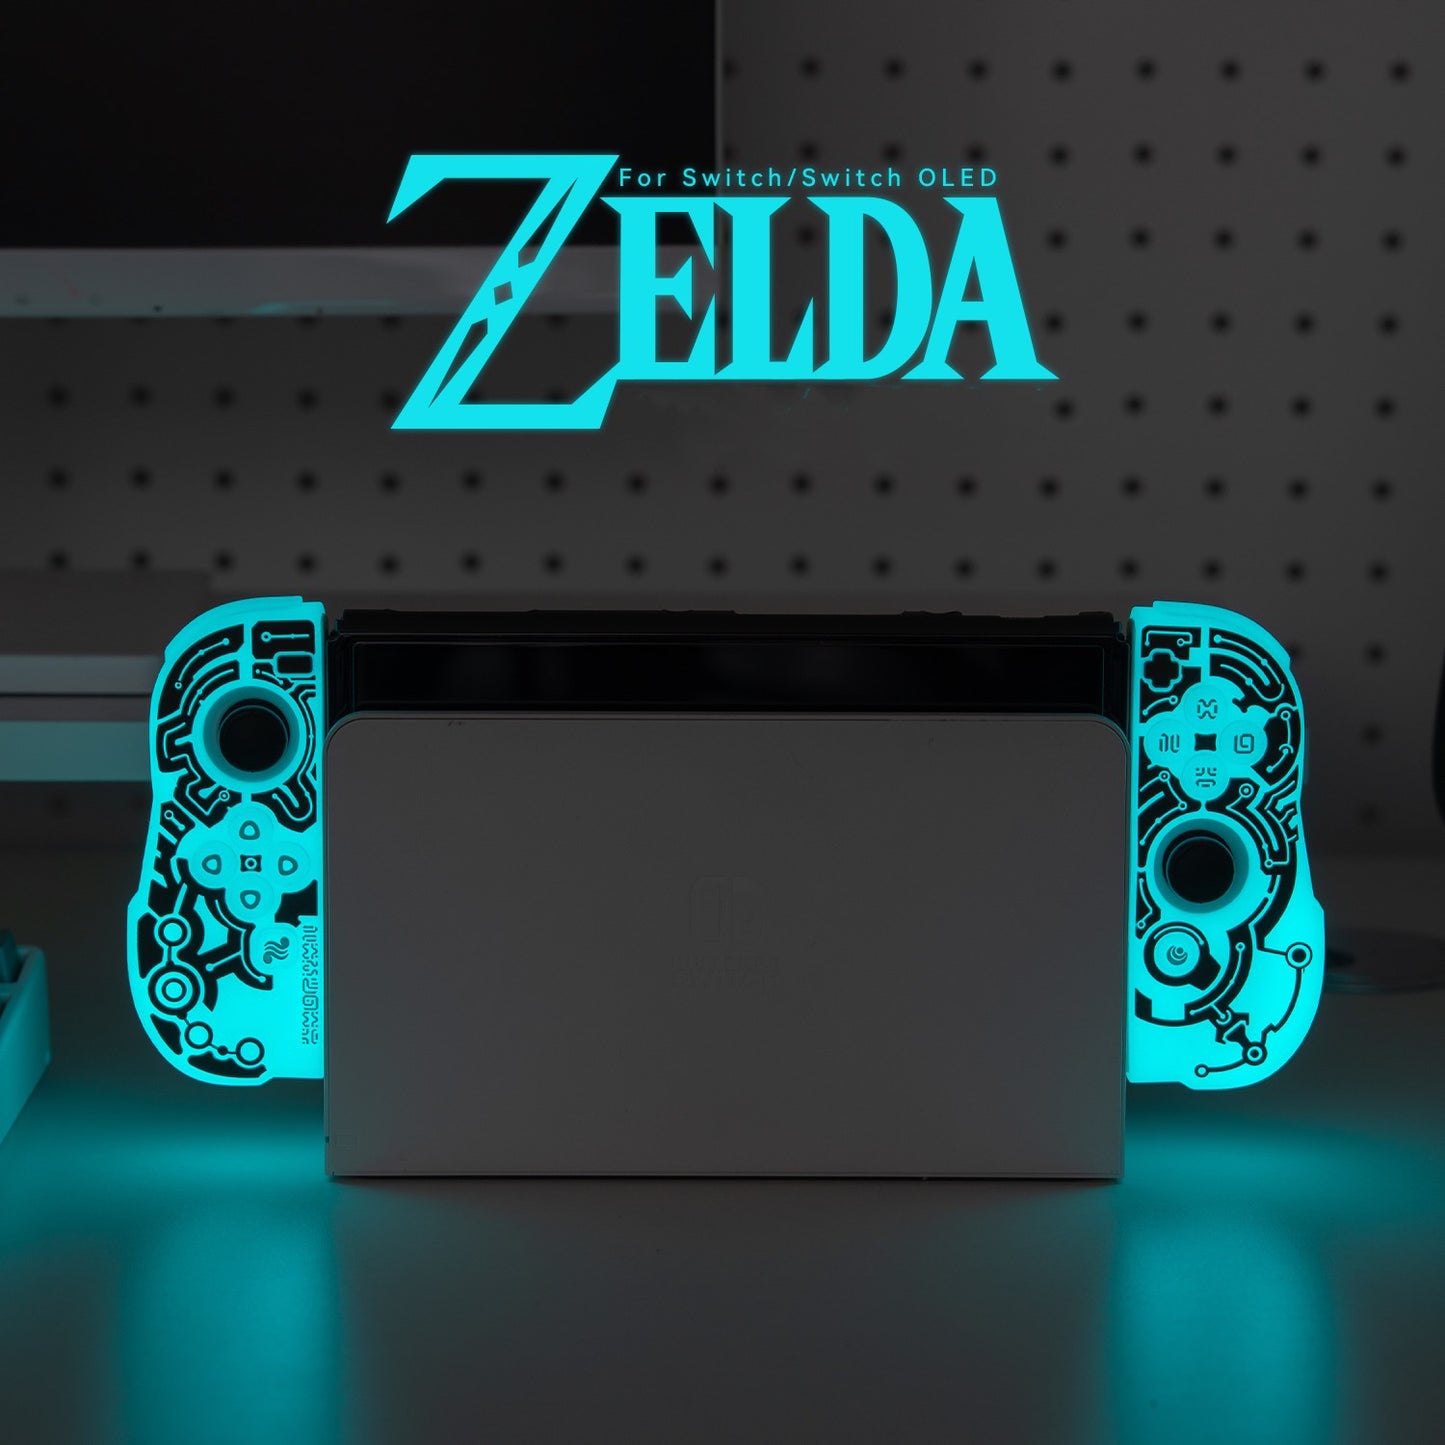 Luminous Zelda Nintendo Switch Accessories / Dust Cover